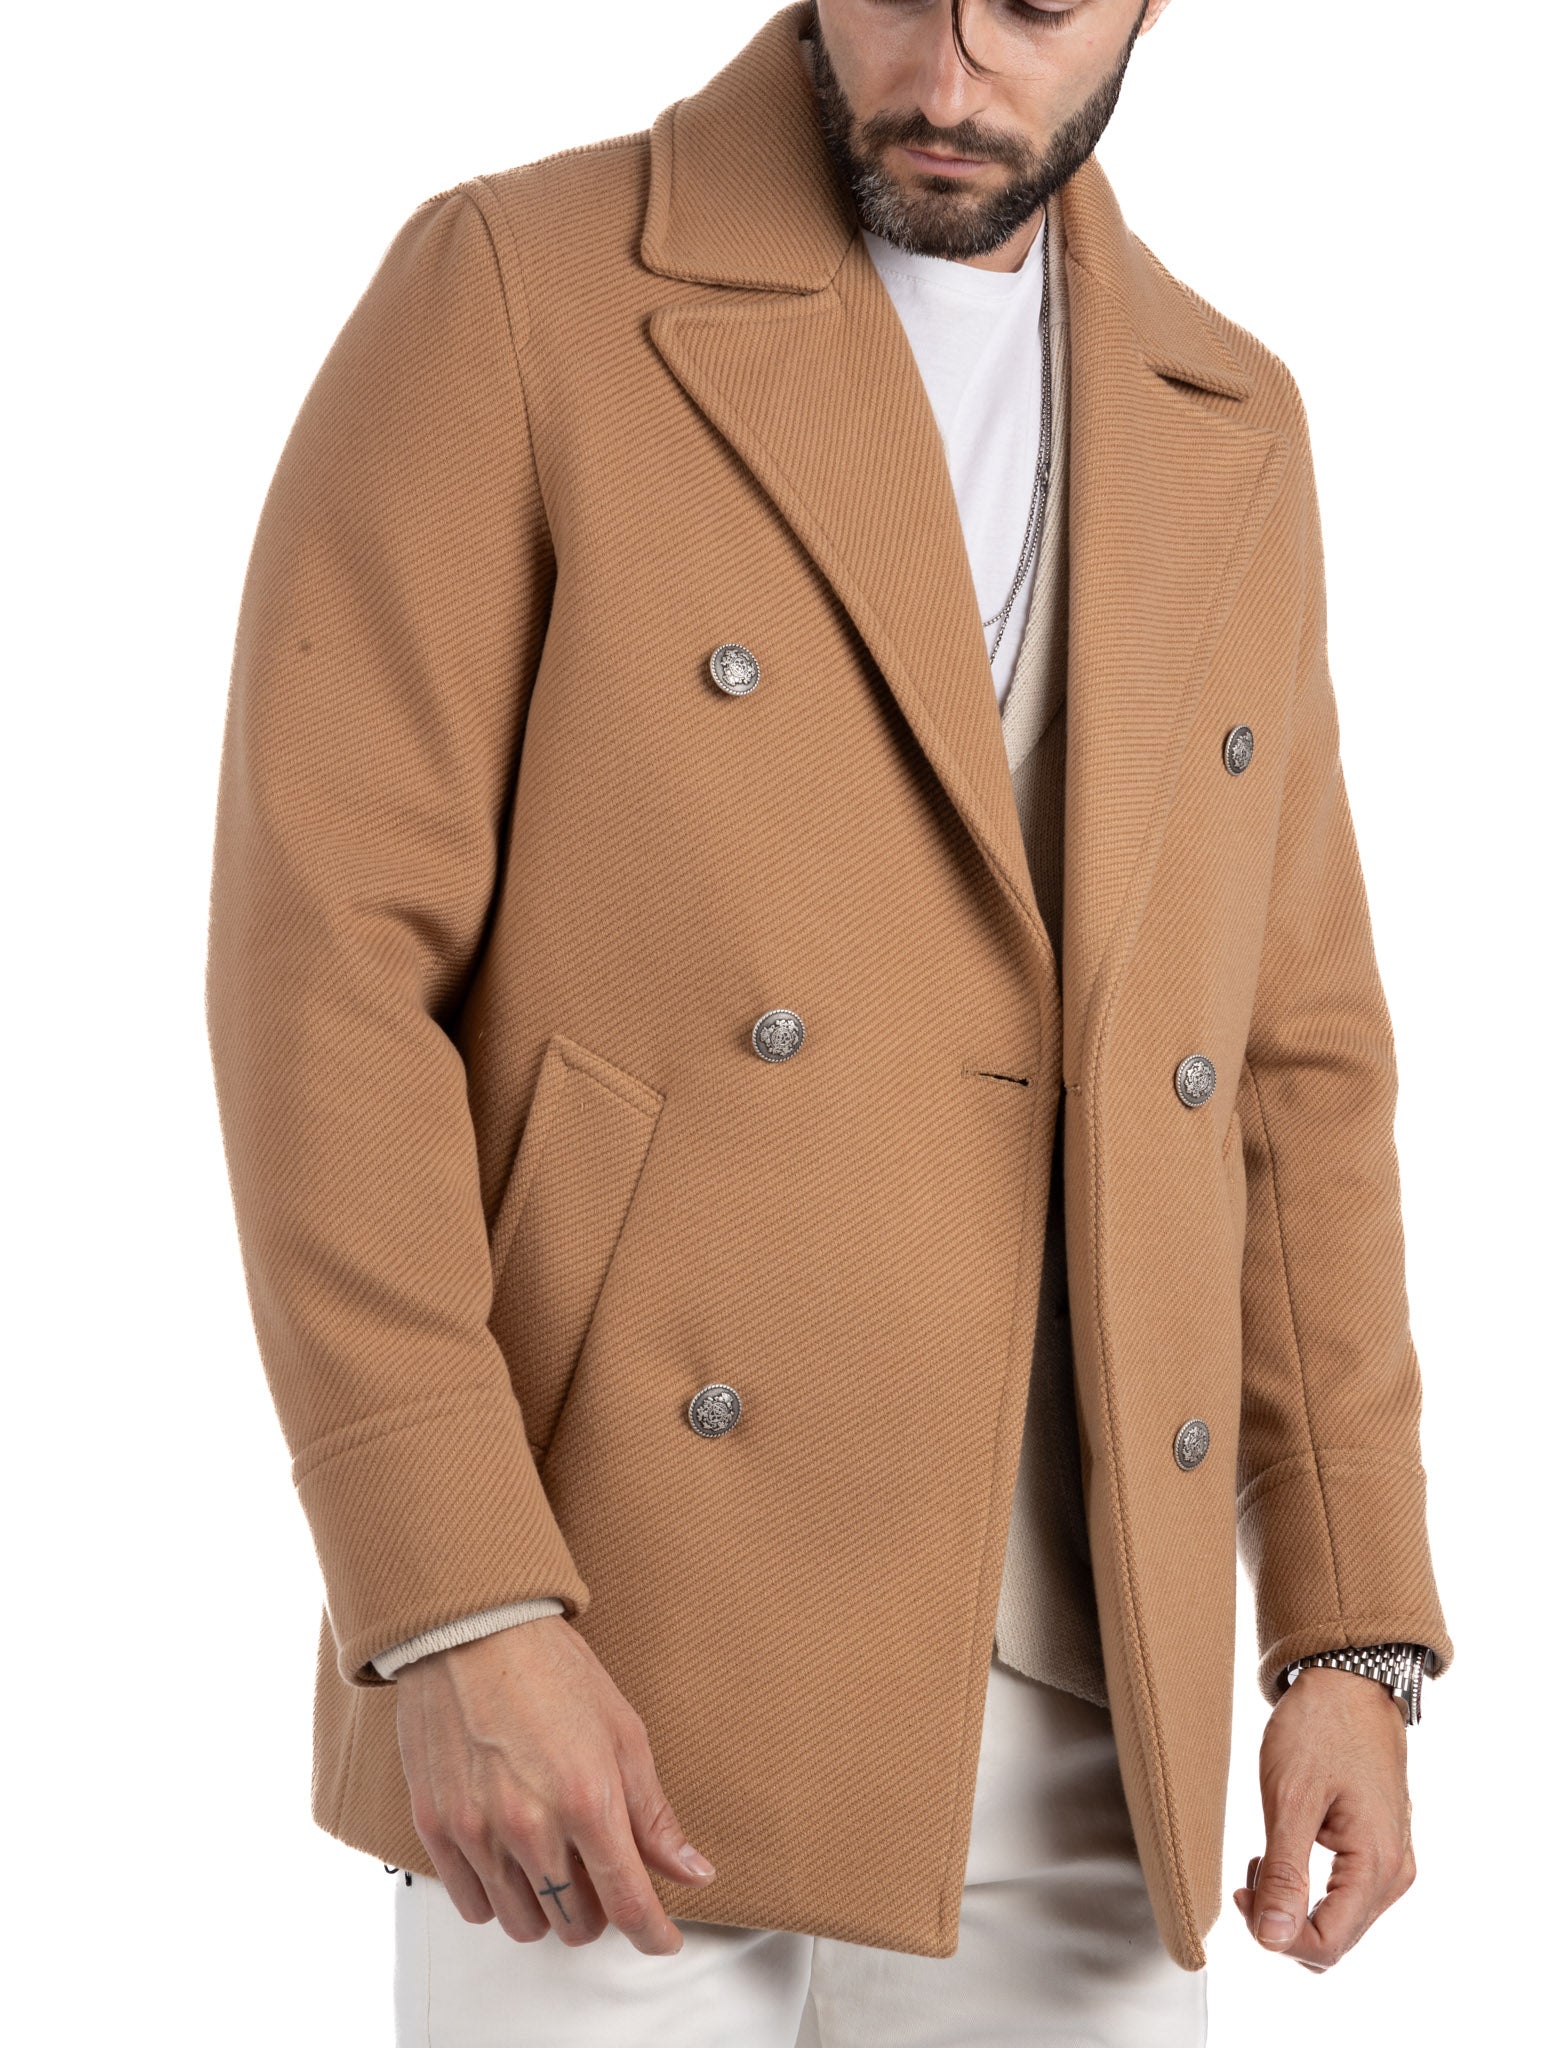 David - beige 3/4 coat